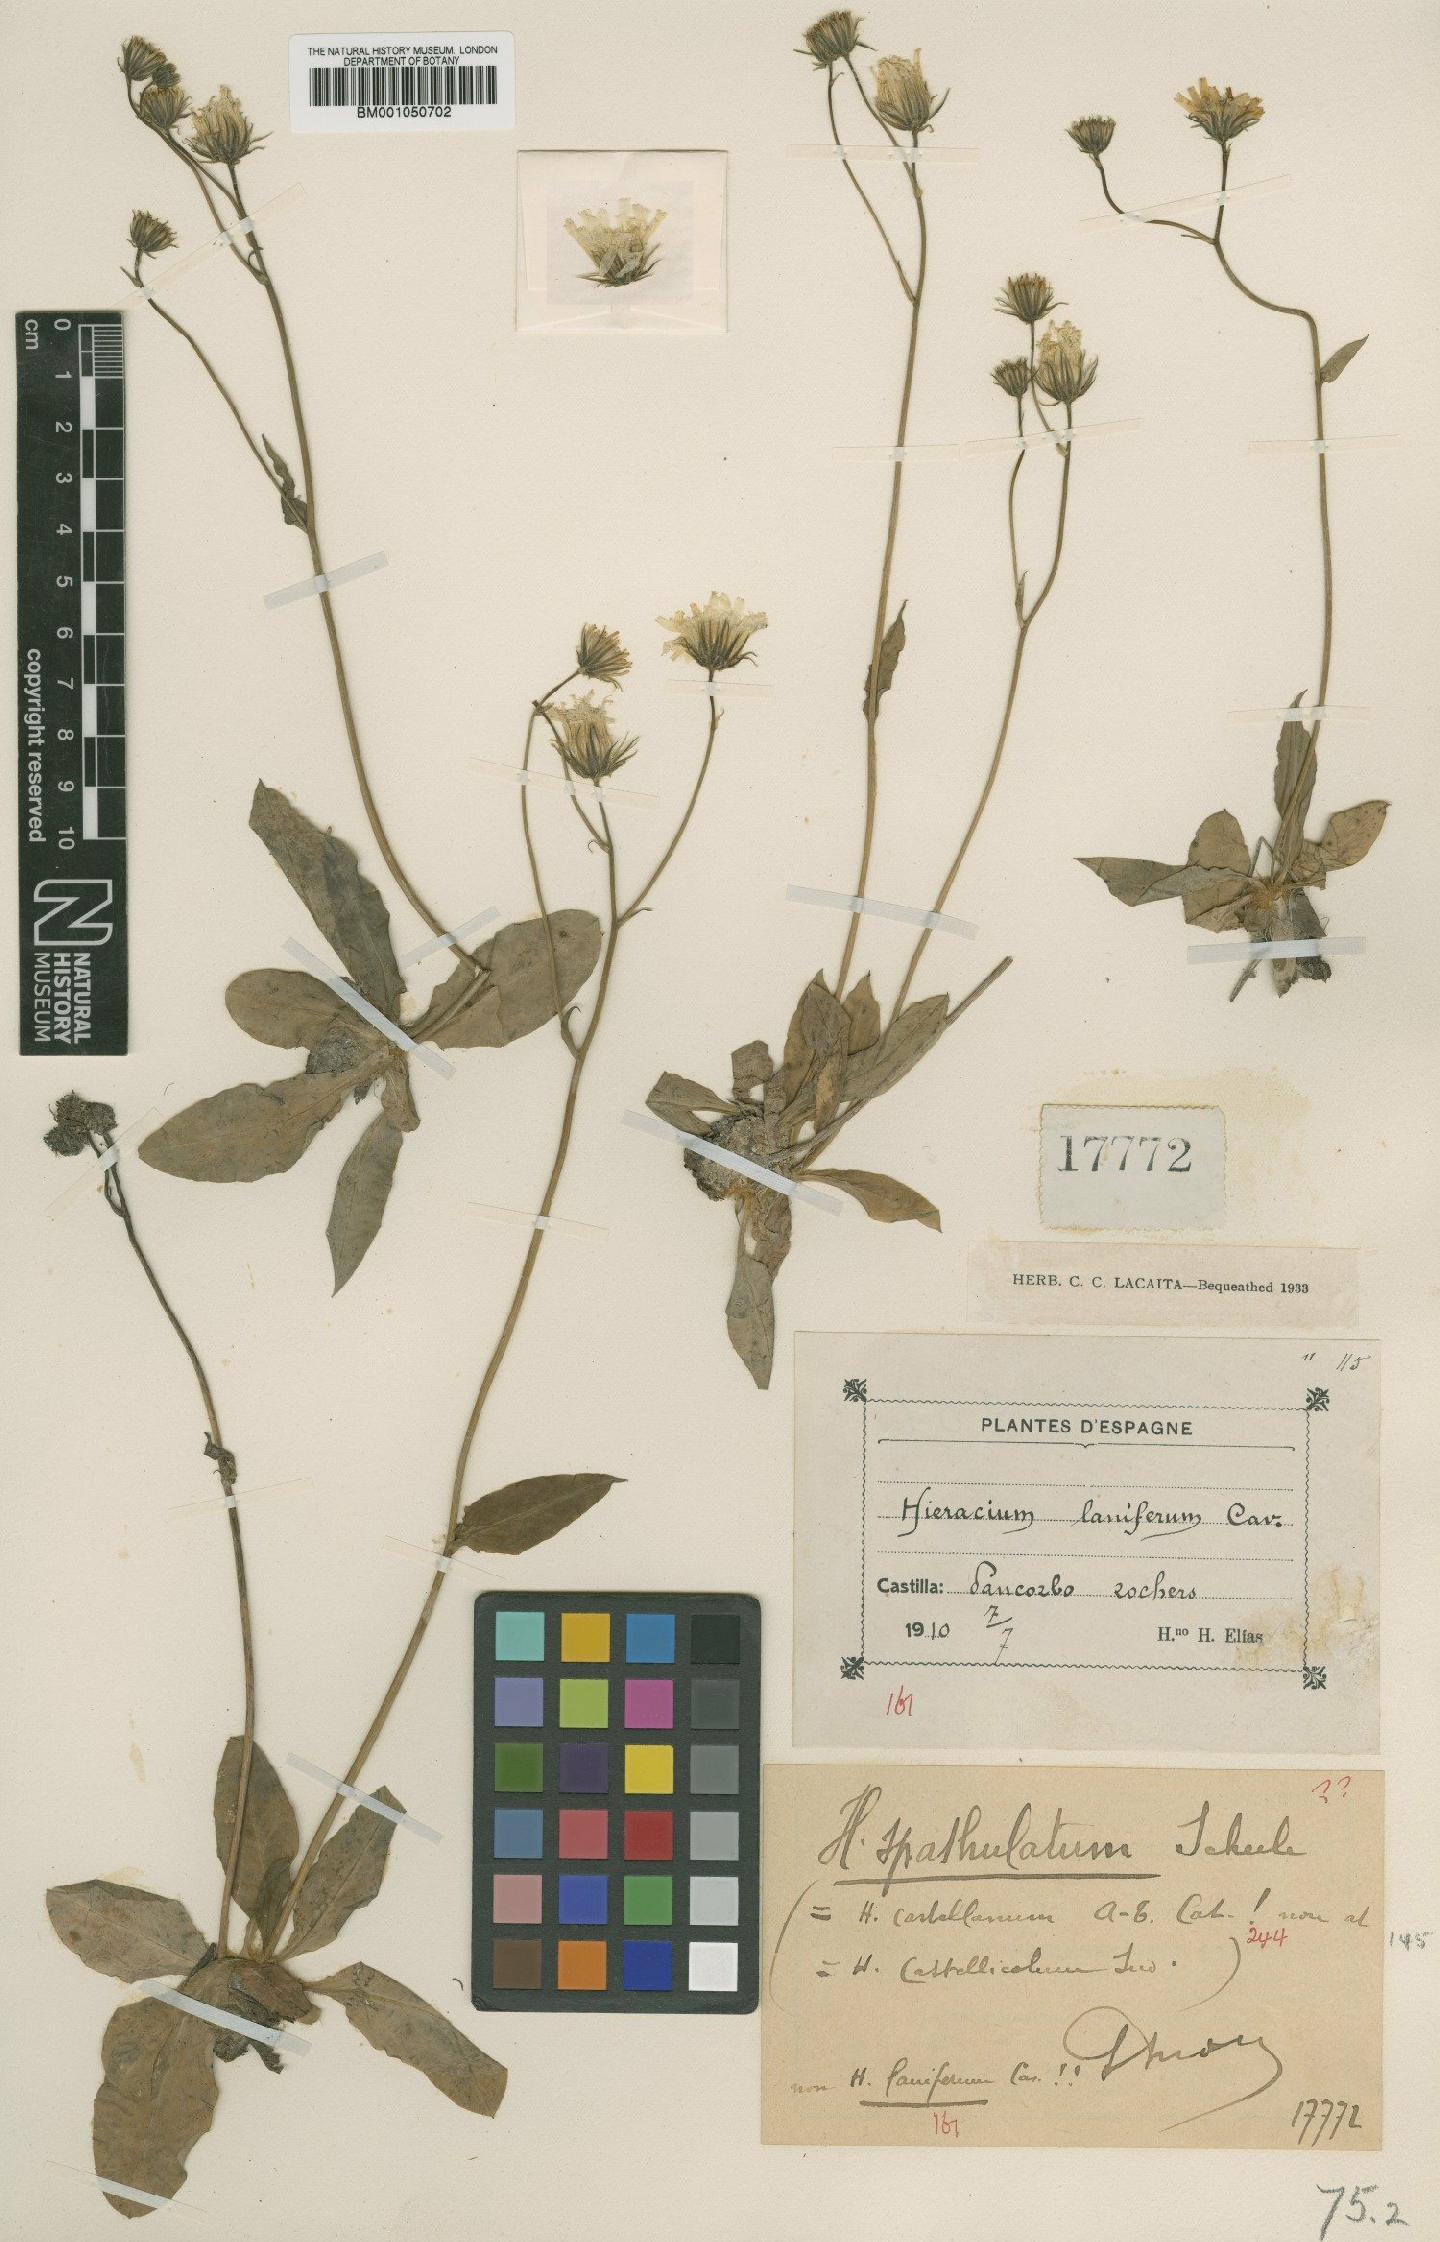 To NHMUK collection (Hieracium laniferum subsp. spathulatum (Scheele) Zahn; TYPE; NHMUK:ecatalogue:2398174)